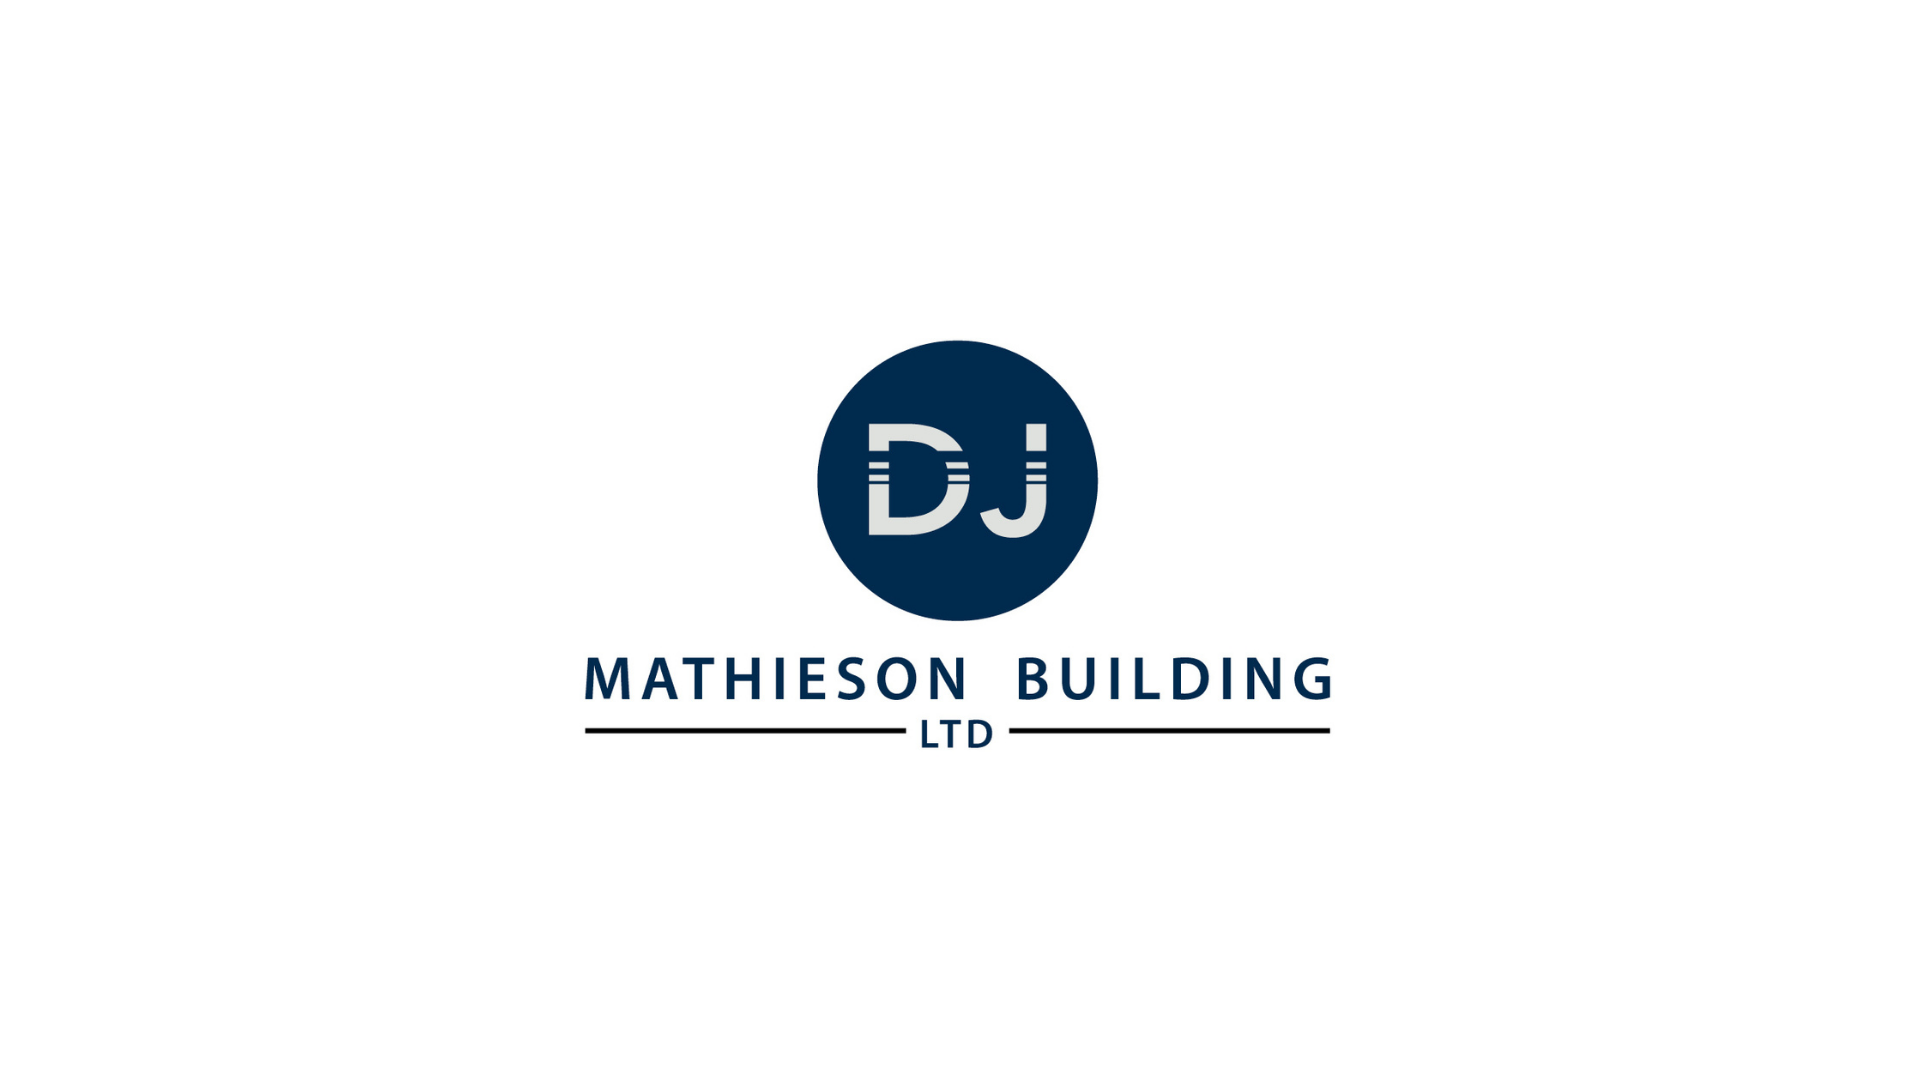 DJ Mathieson